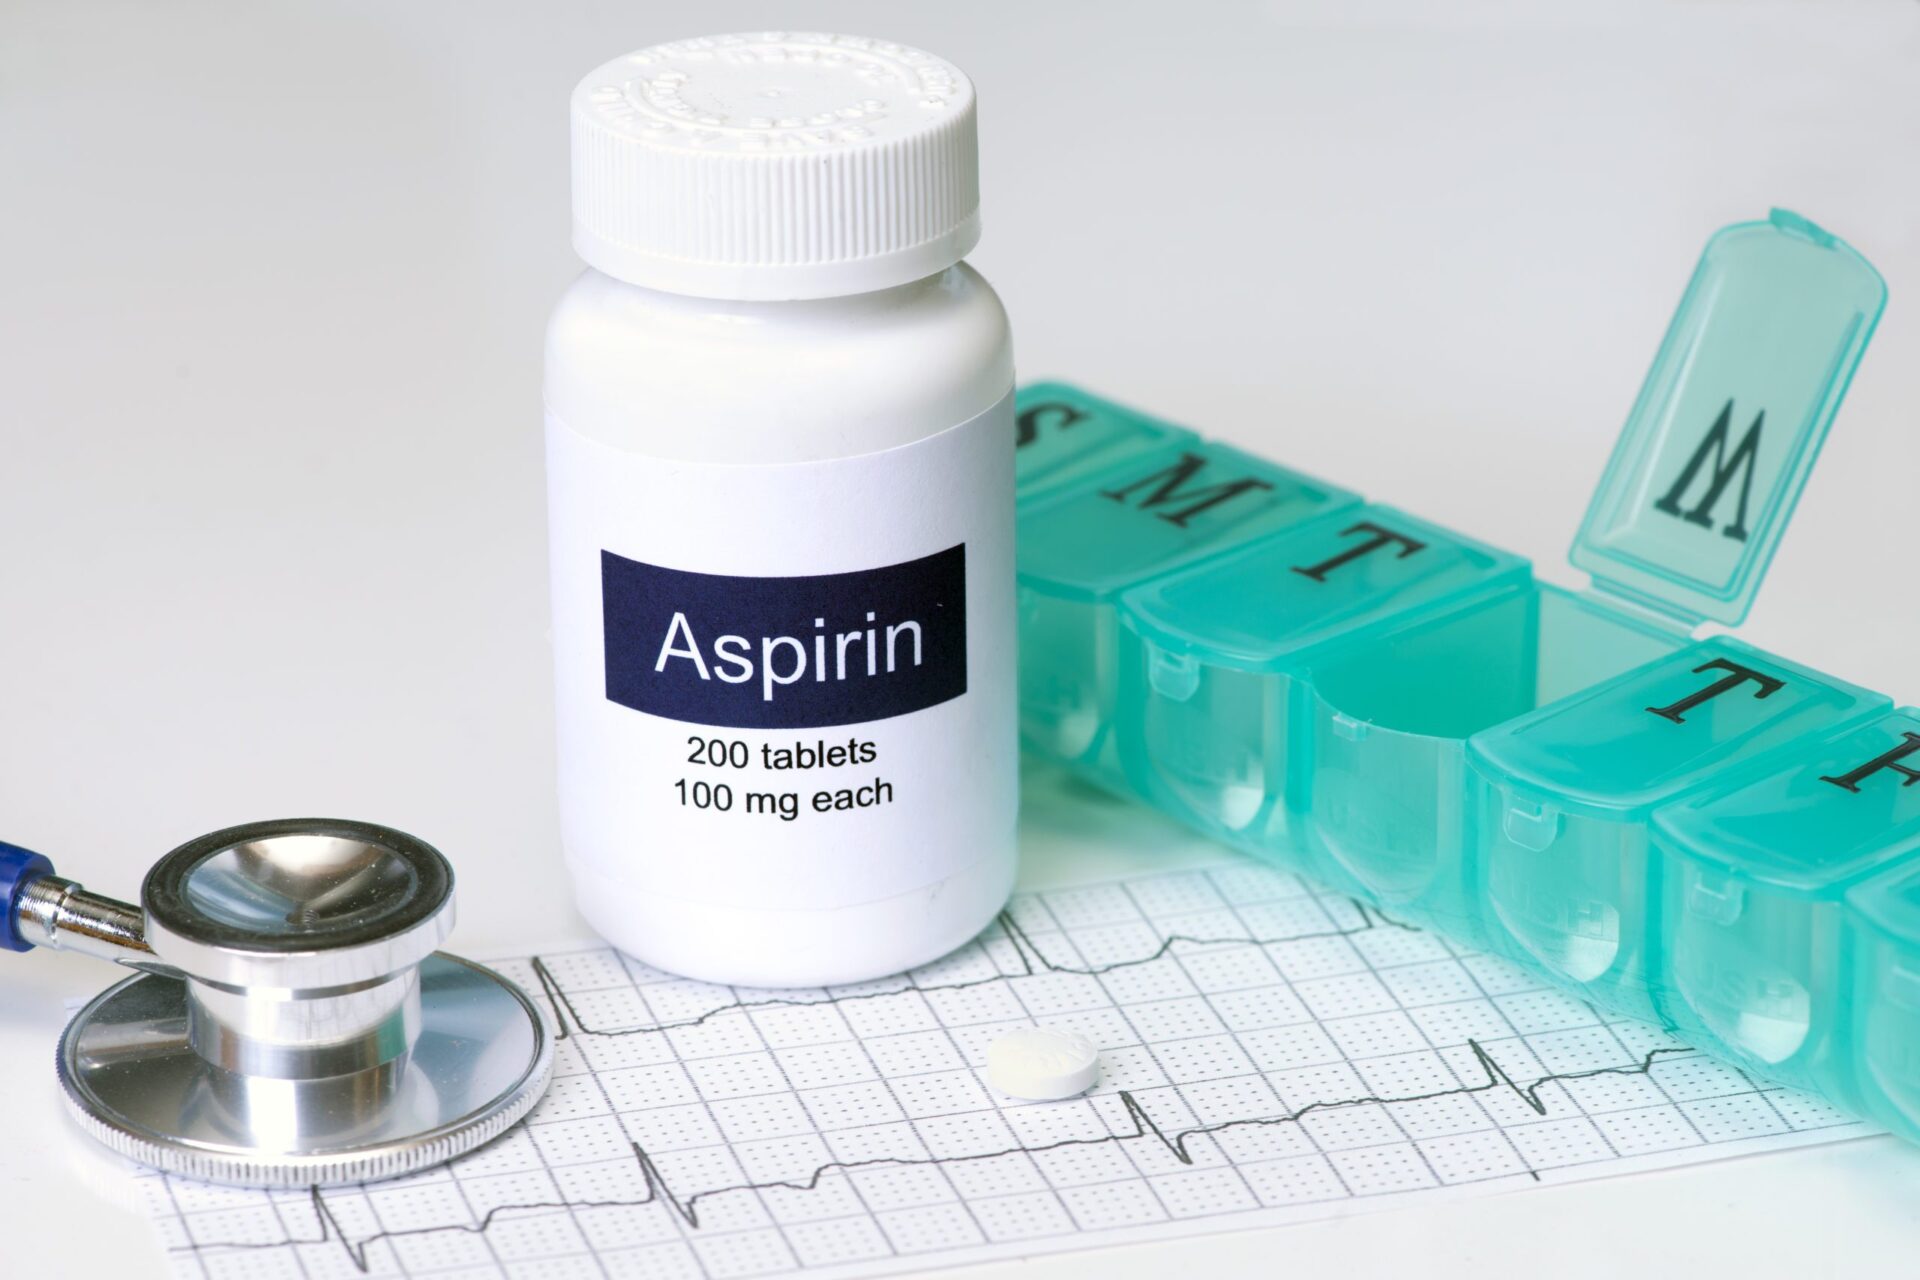 An aspirin bottle sits between a weekly pill organizer and a stethoscope, atop a heart monitor chart